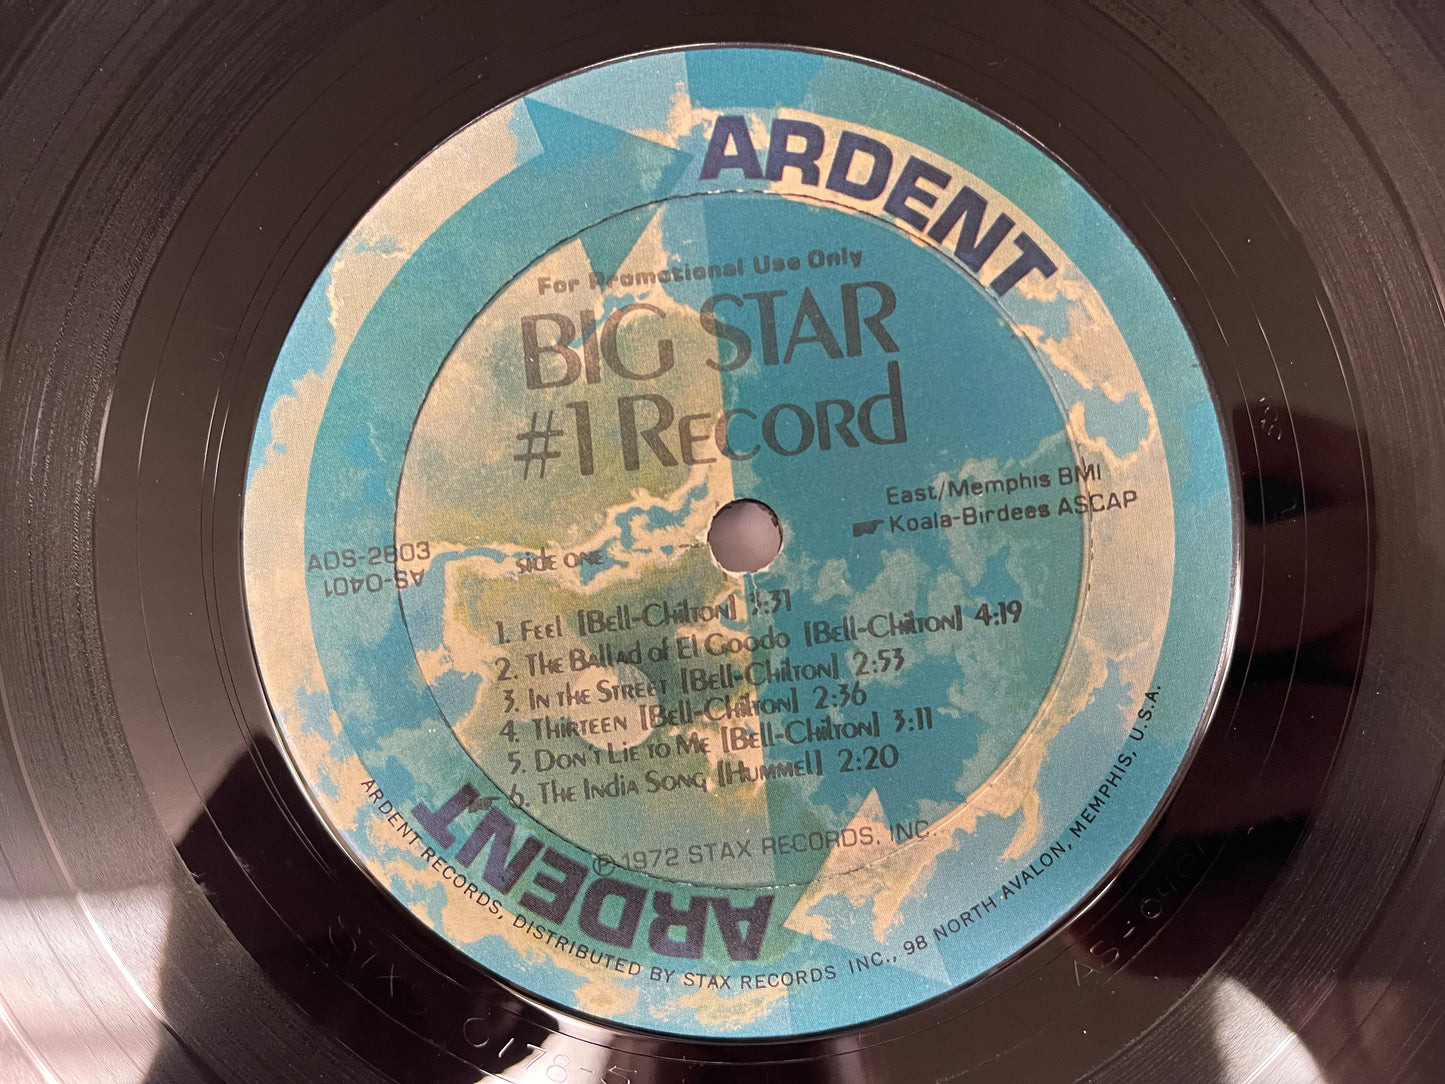 Big Star - #1 Record ( 1972 USA, 1st Pressing)